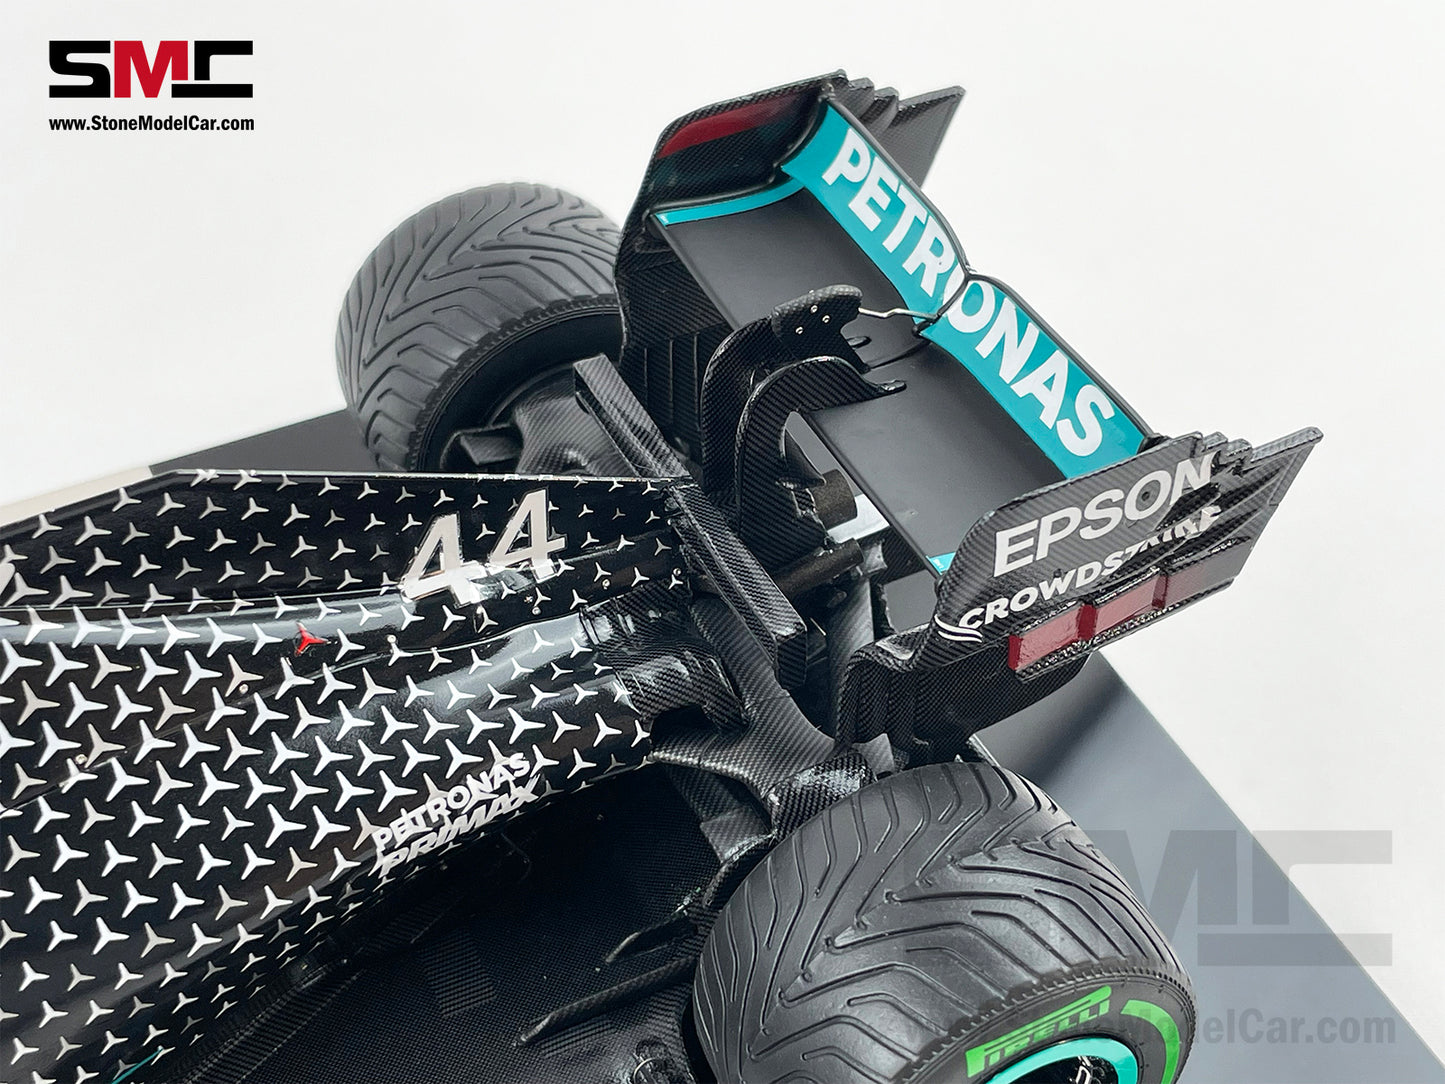 Amalgam Collection 1:18 2020 7x World Champion Mercedes F1 W11 #44 Lewis Hamilton Turkey GP